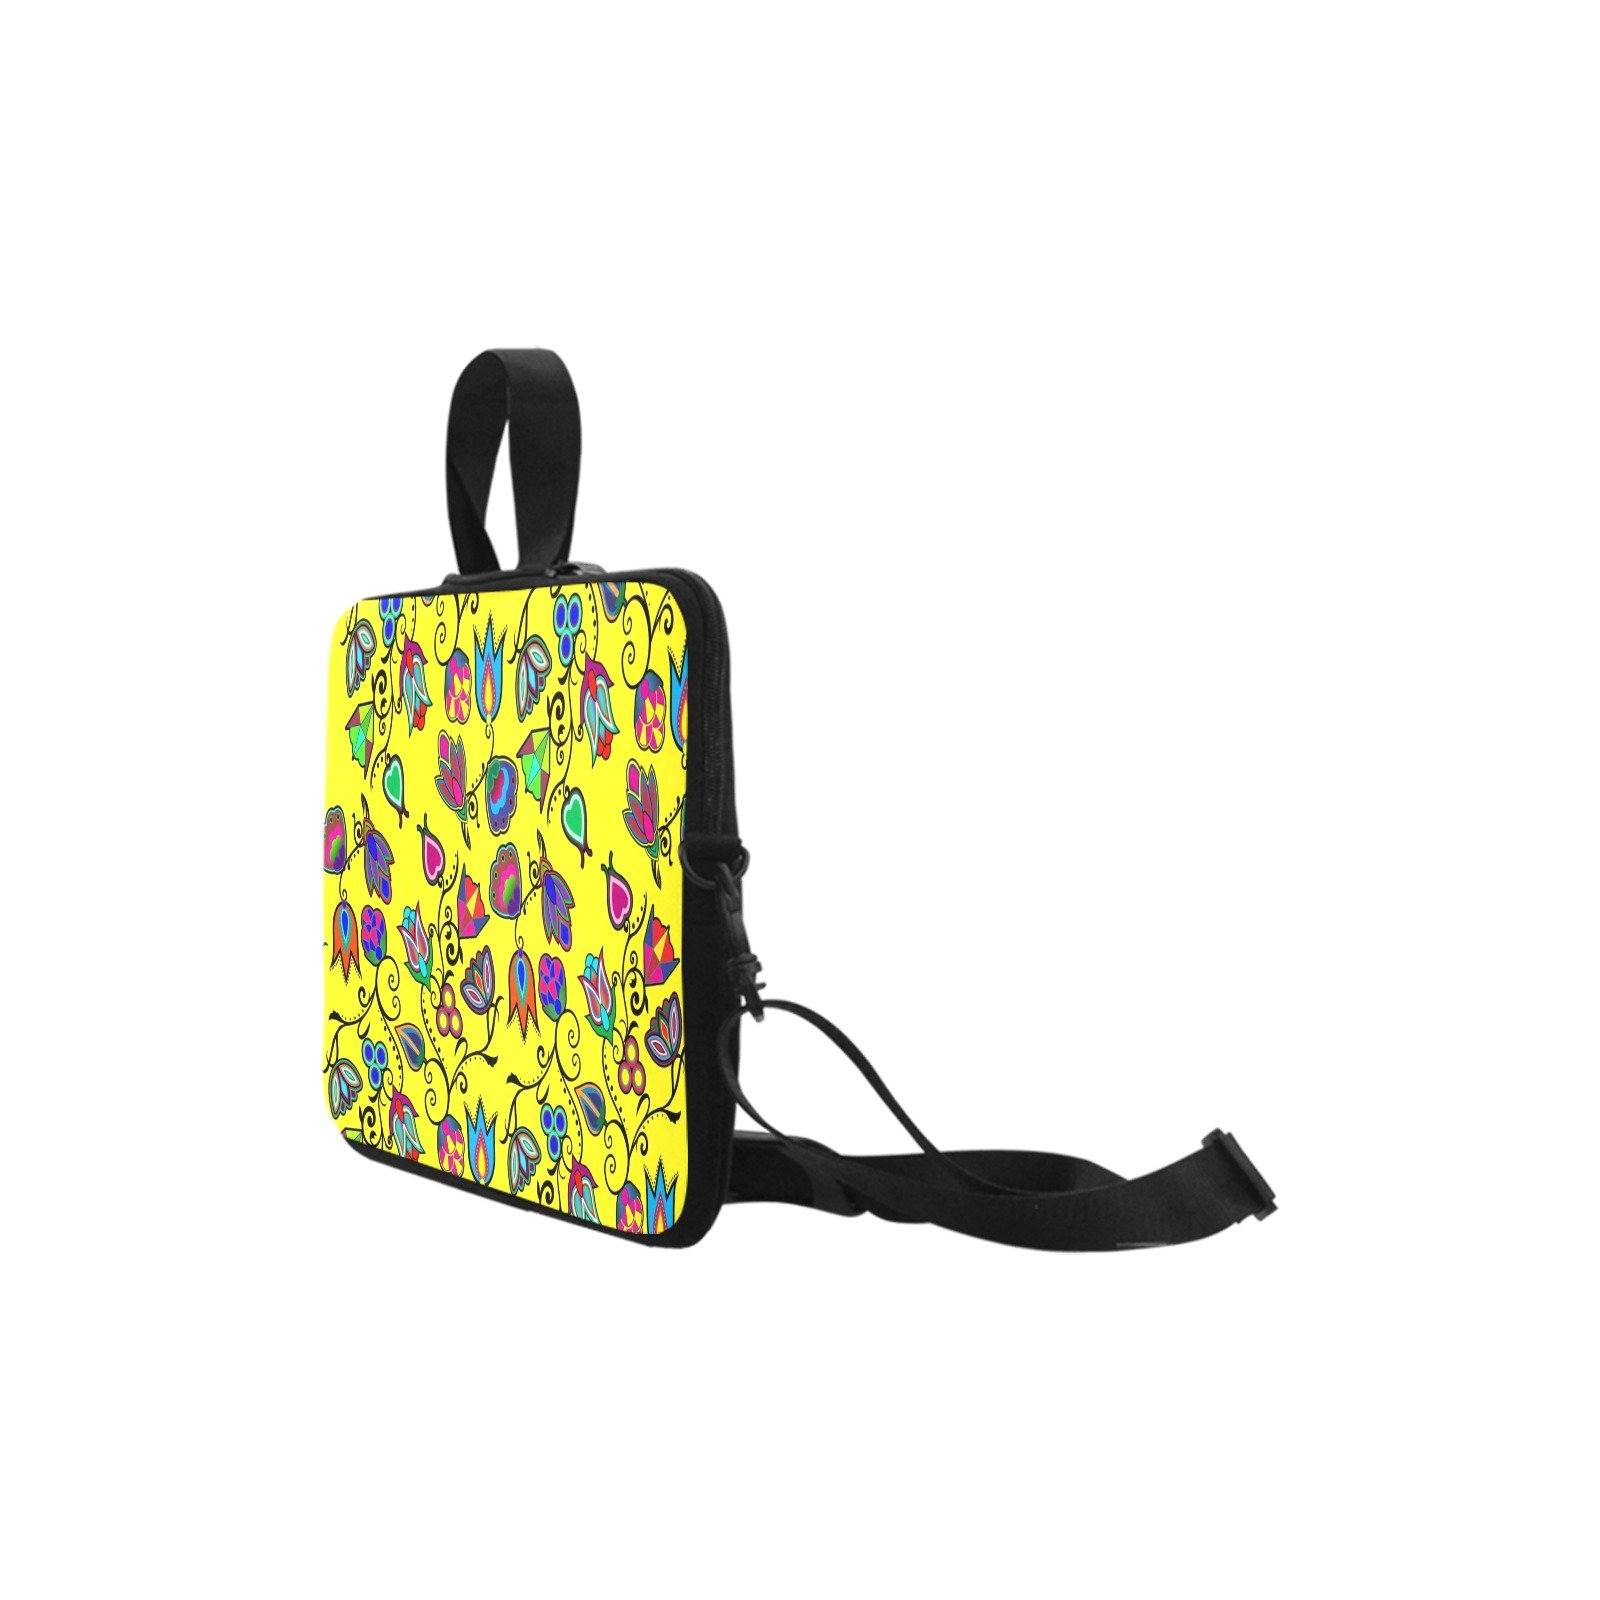 Indigenous Paisley Yellow Laptop Handbags 14" bag e-joyer 